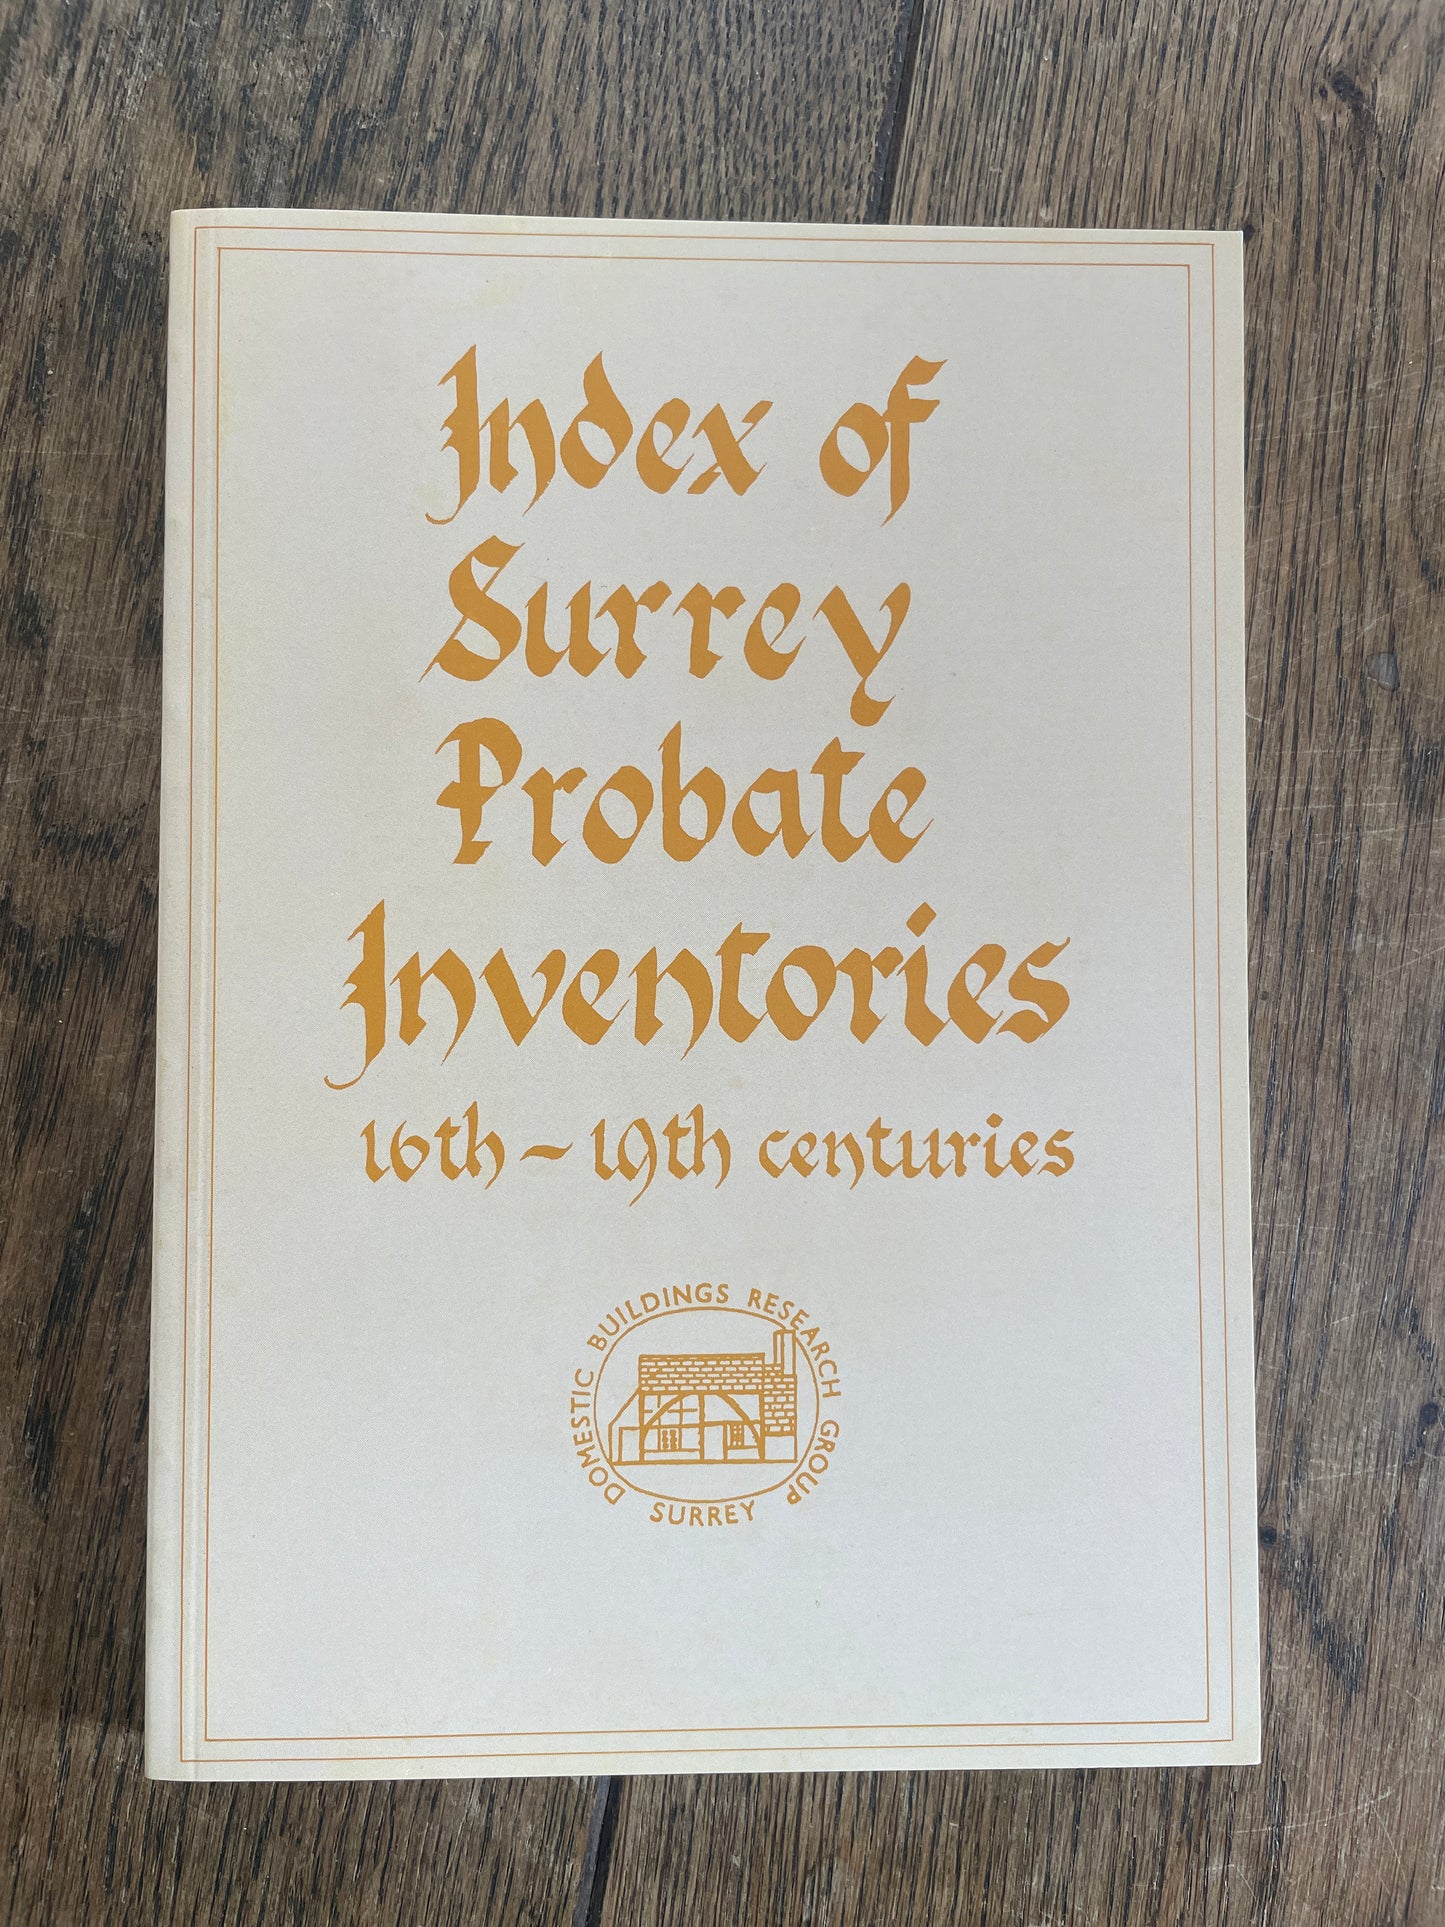 Index of Surrey probate inventories: 16th-19th centuries